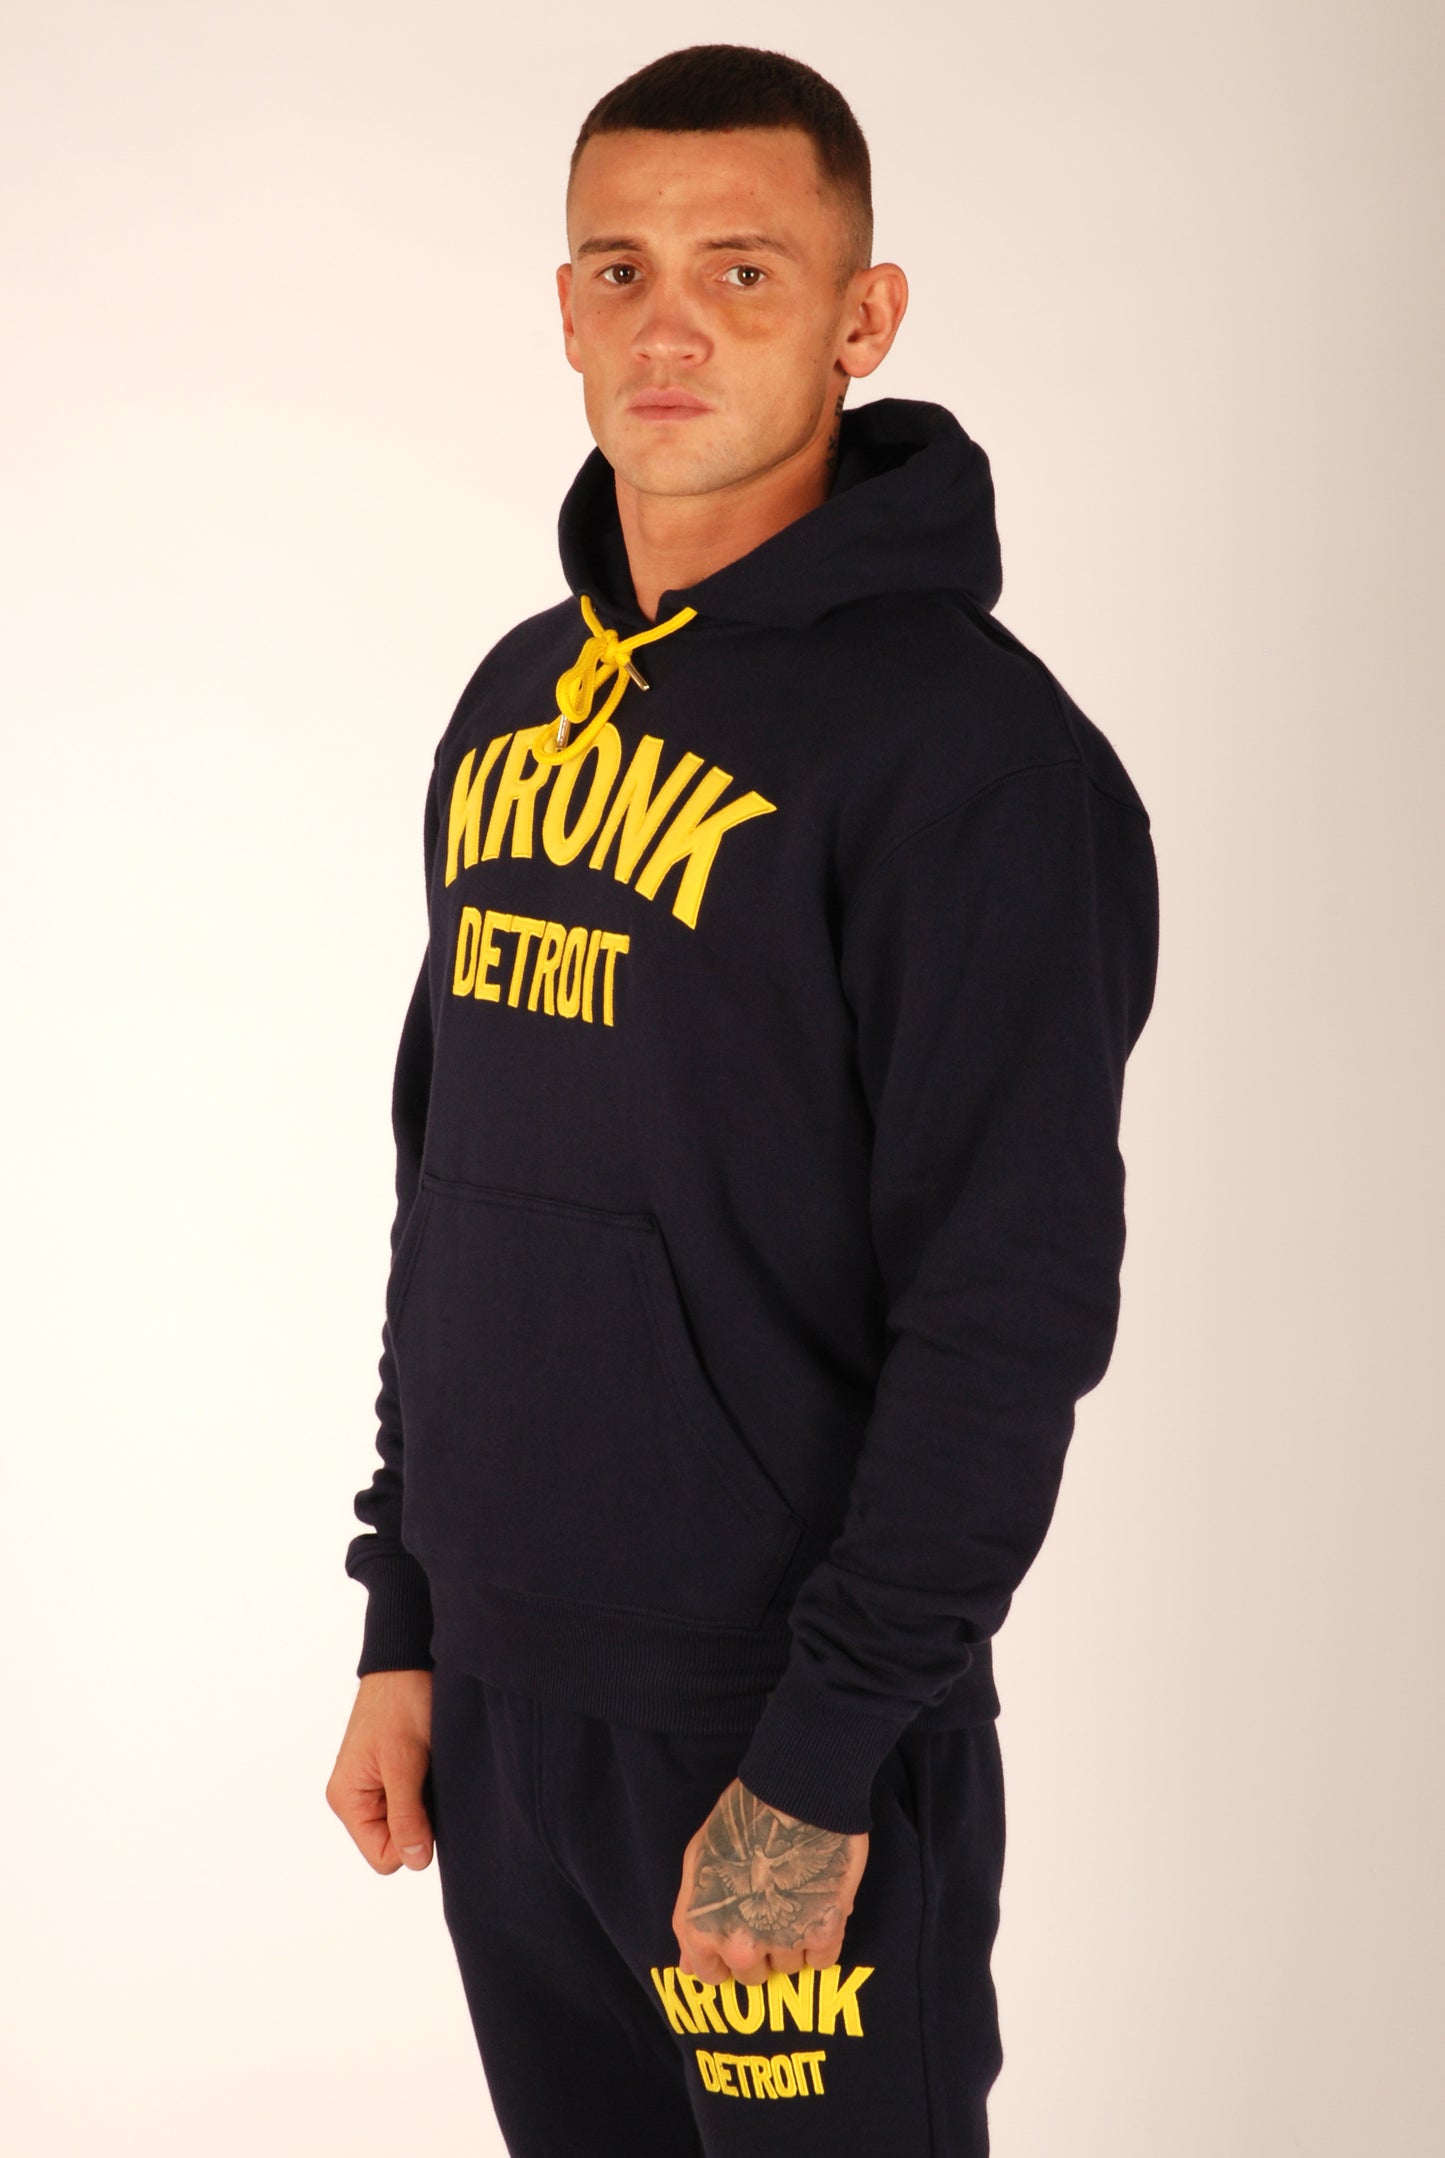 KRONK Detroit Applique Hoodie Regular Fit Navy with Yellow logo